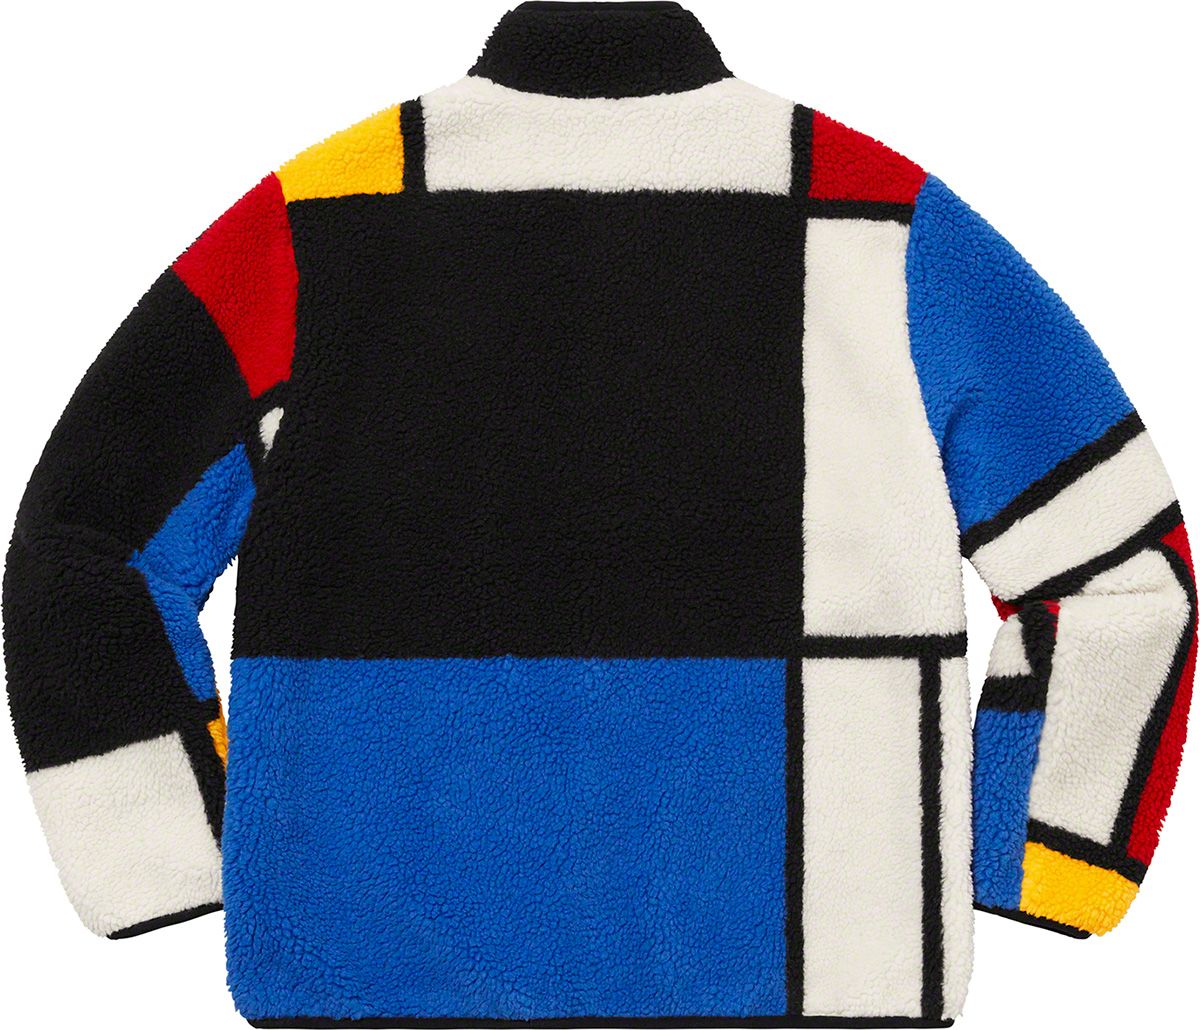 Reversible Colorblocked Fleece Jacket - Fall/Winter 2020 Preview 